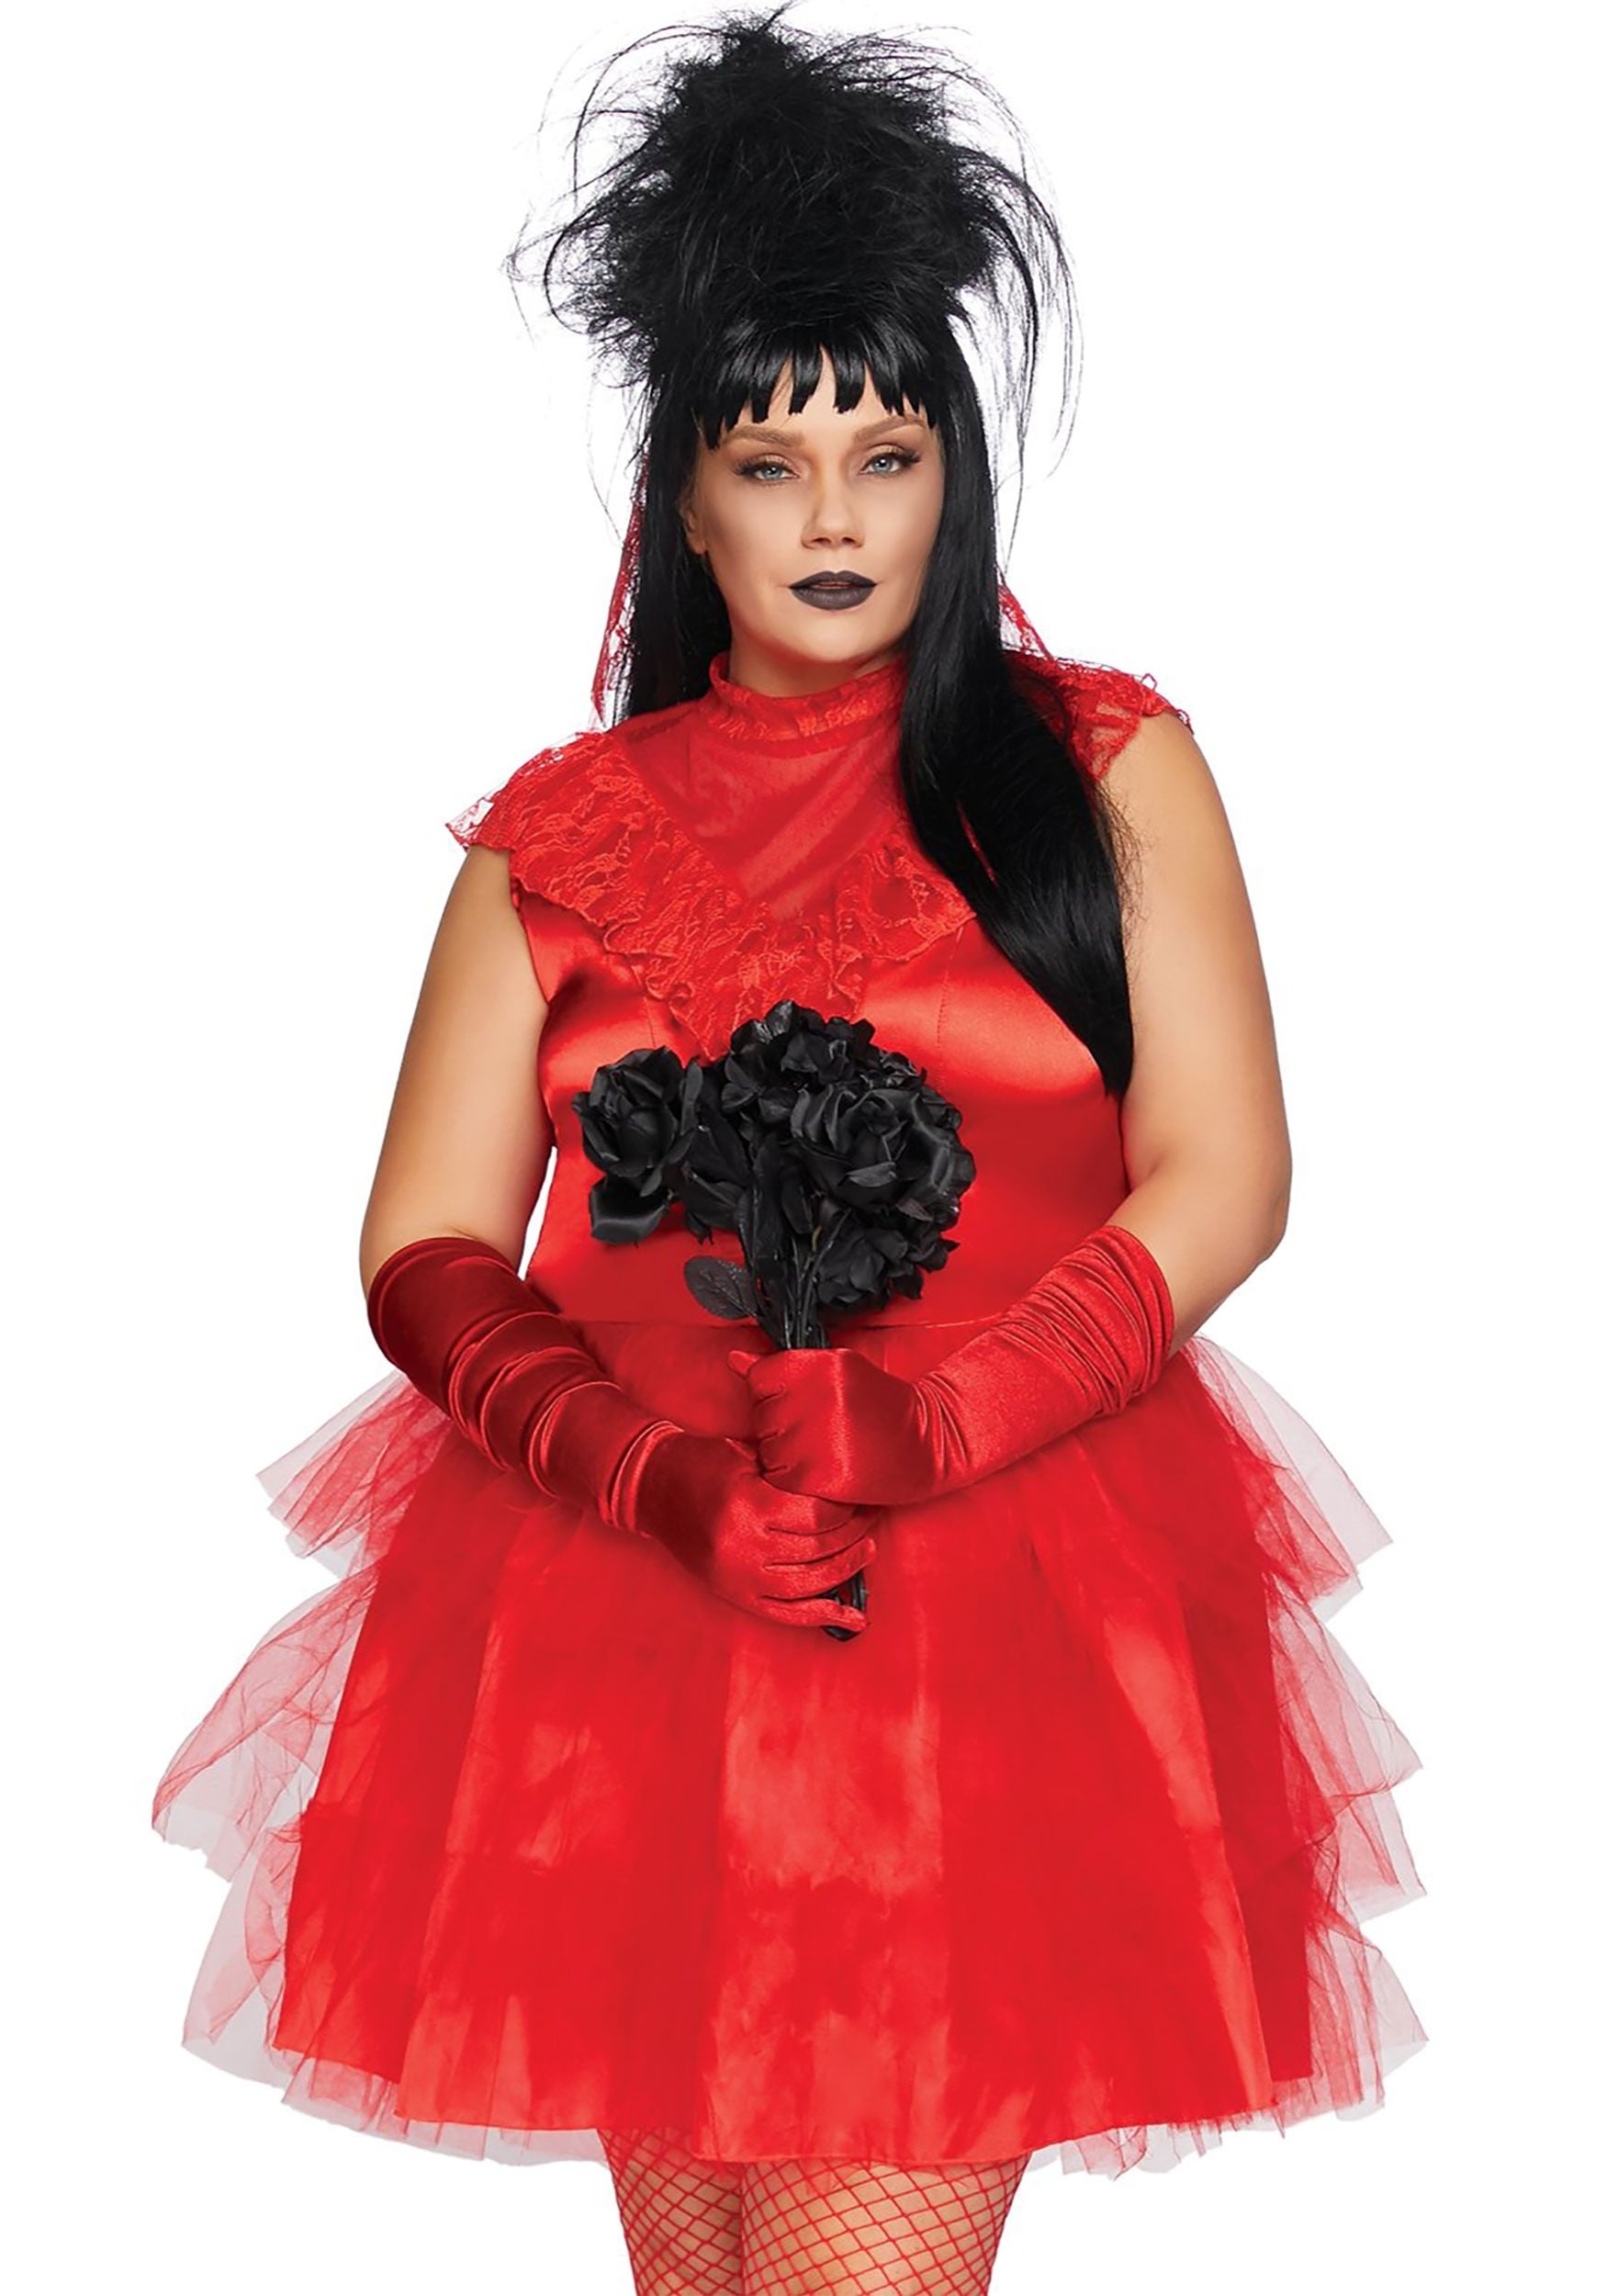 Best Halloween Costume Ideas Curvy Women, 2022 Guide